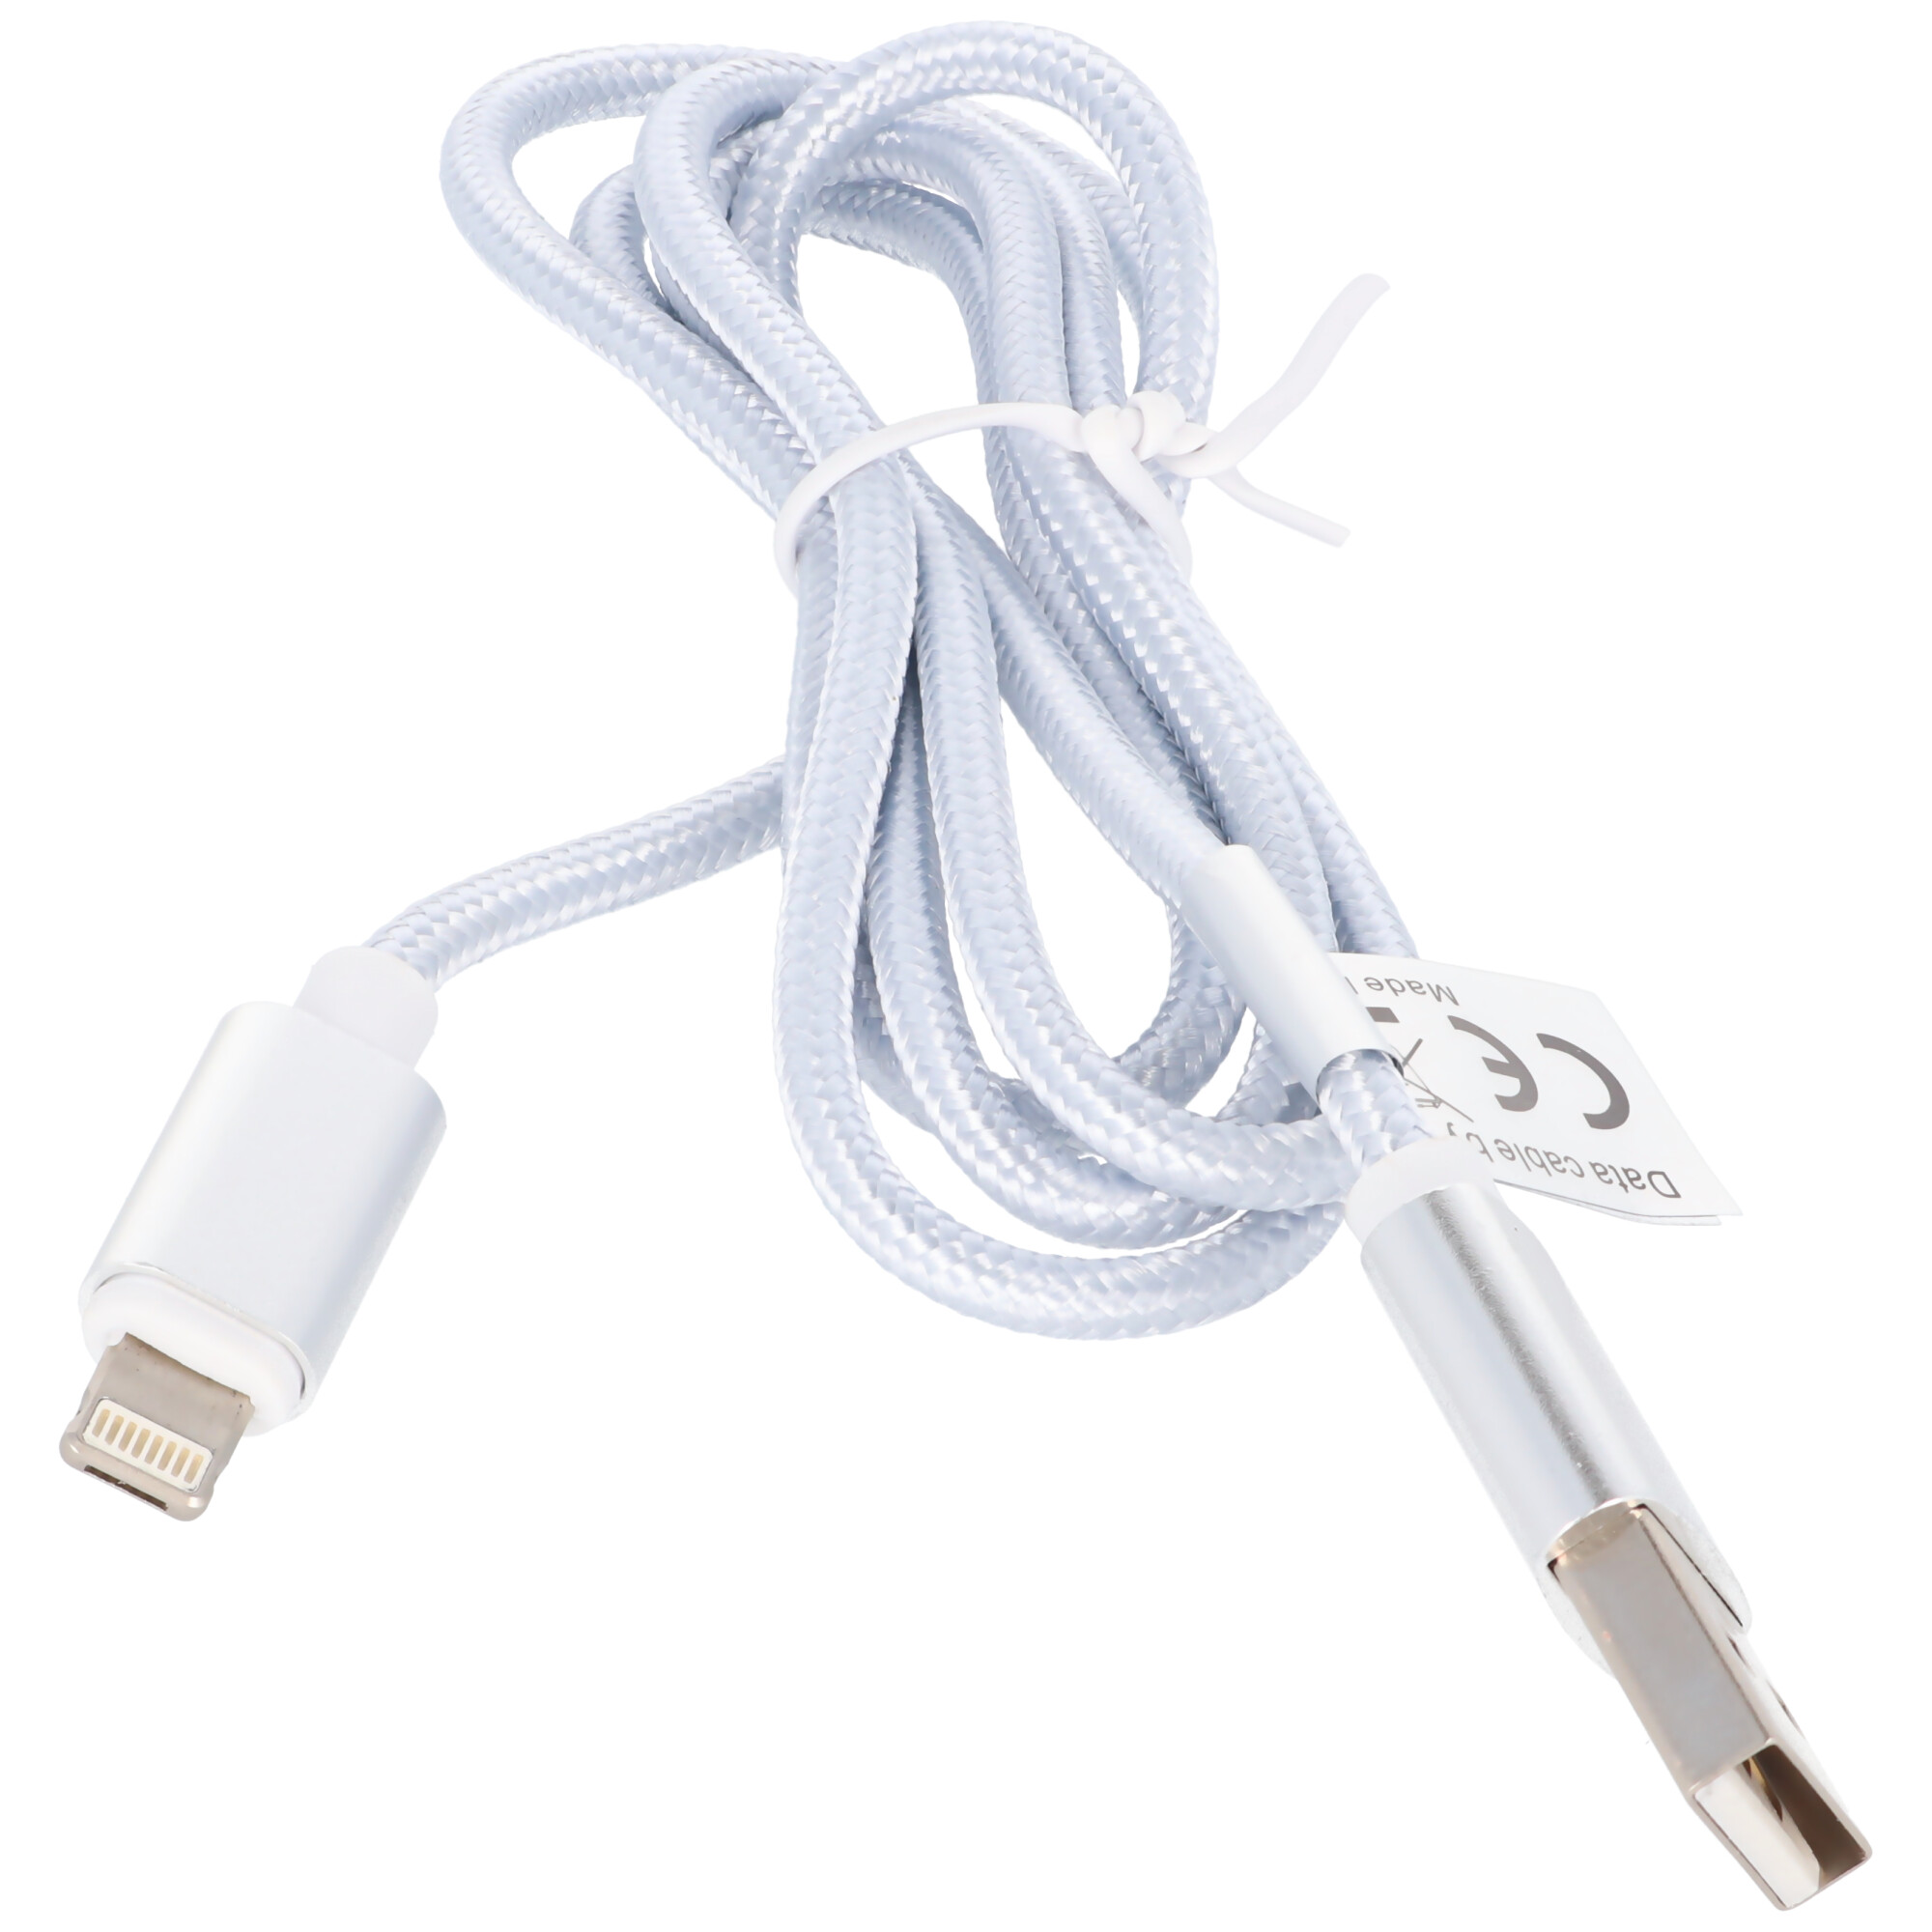 USB Datenkabel für Apple iPhone XS, Apple iPhone XS Max, Apple iPhone XR, innovativer 2in1 Stecker für iPhone und Micro USB, ca. 1 Meter lang, Silber